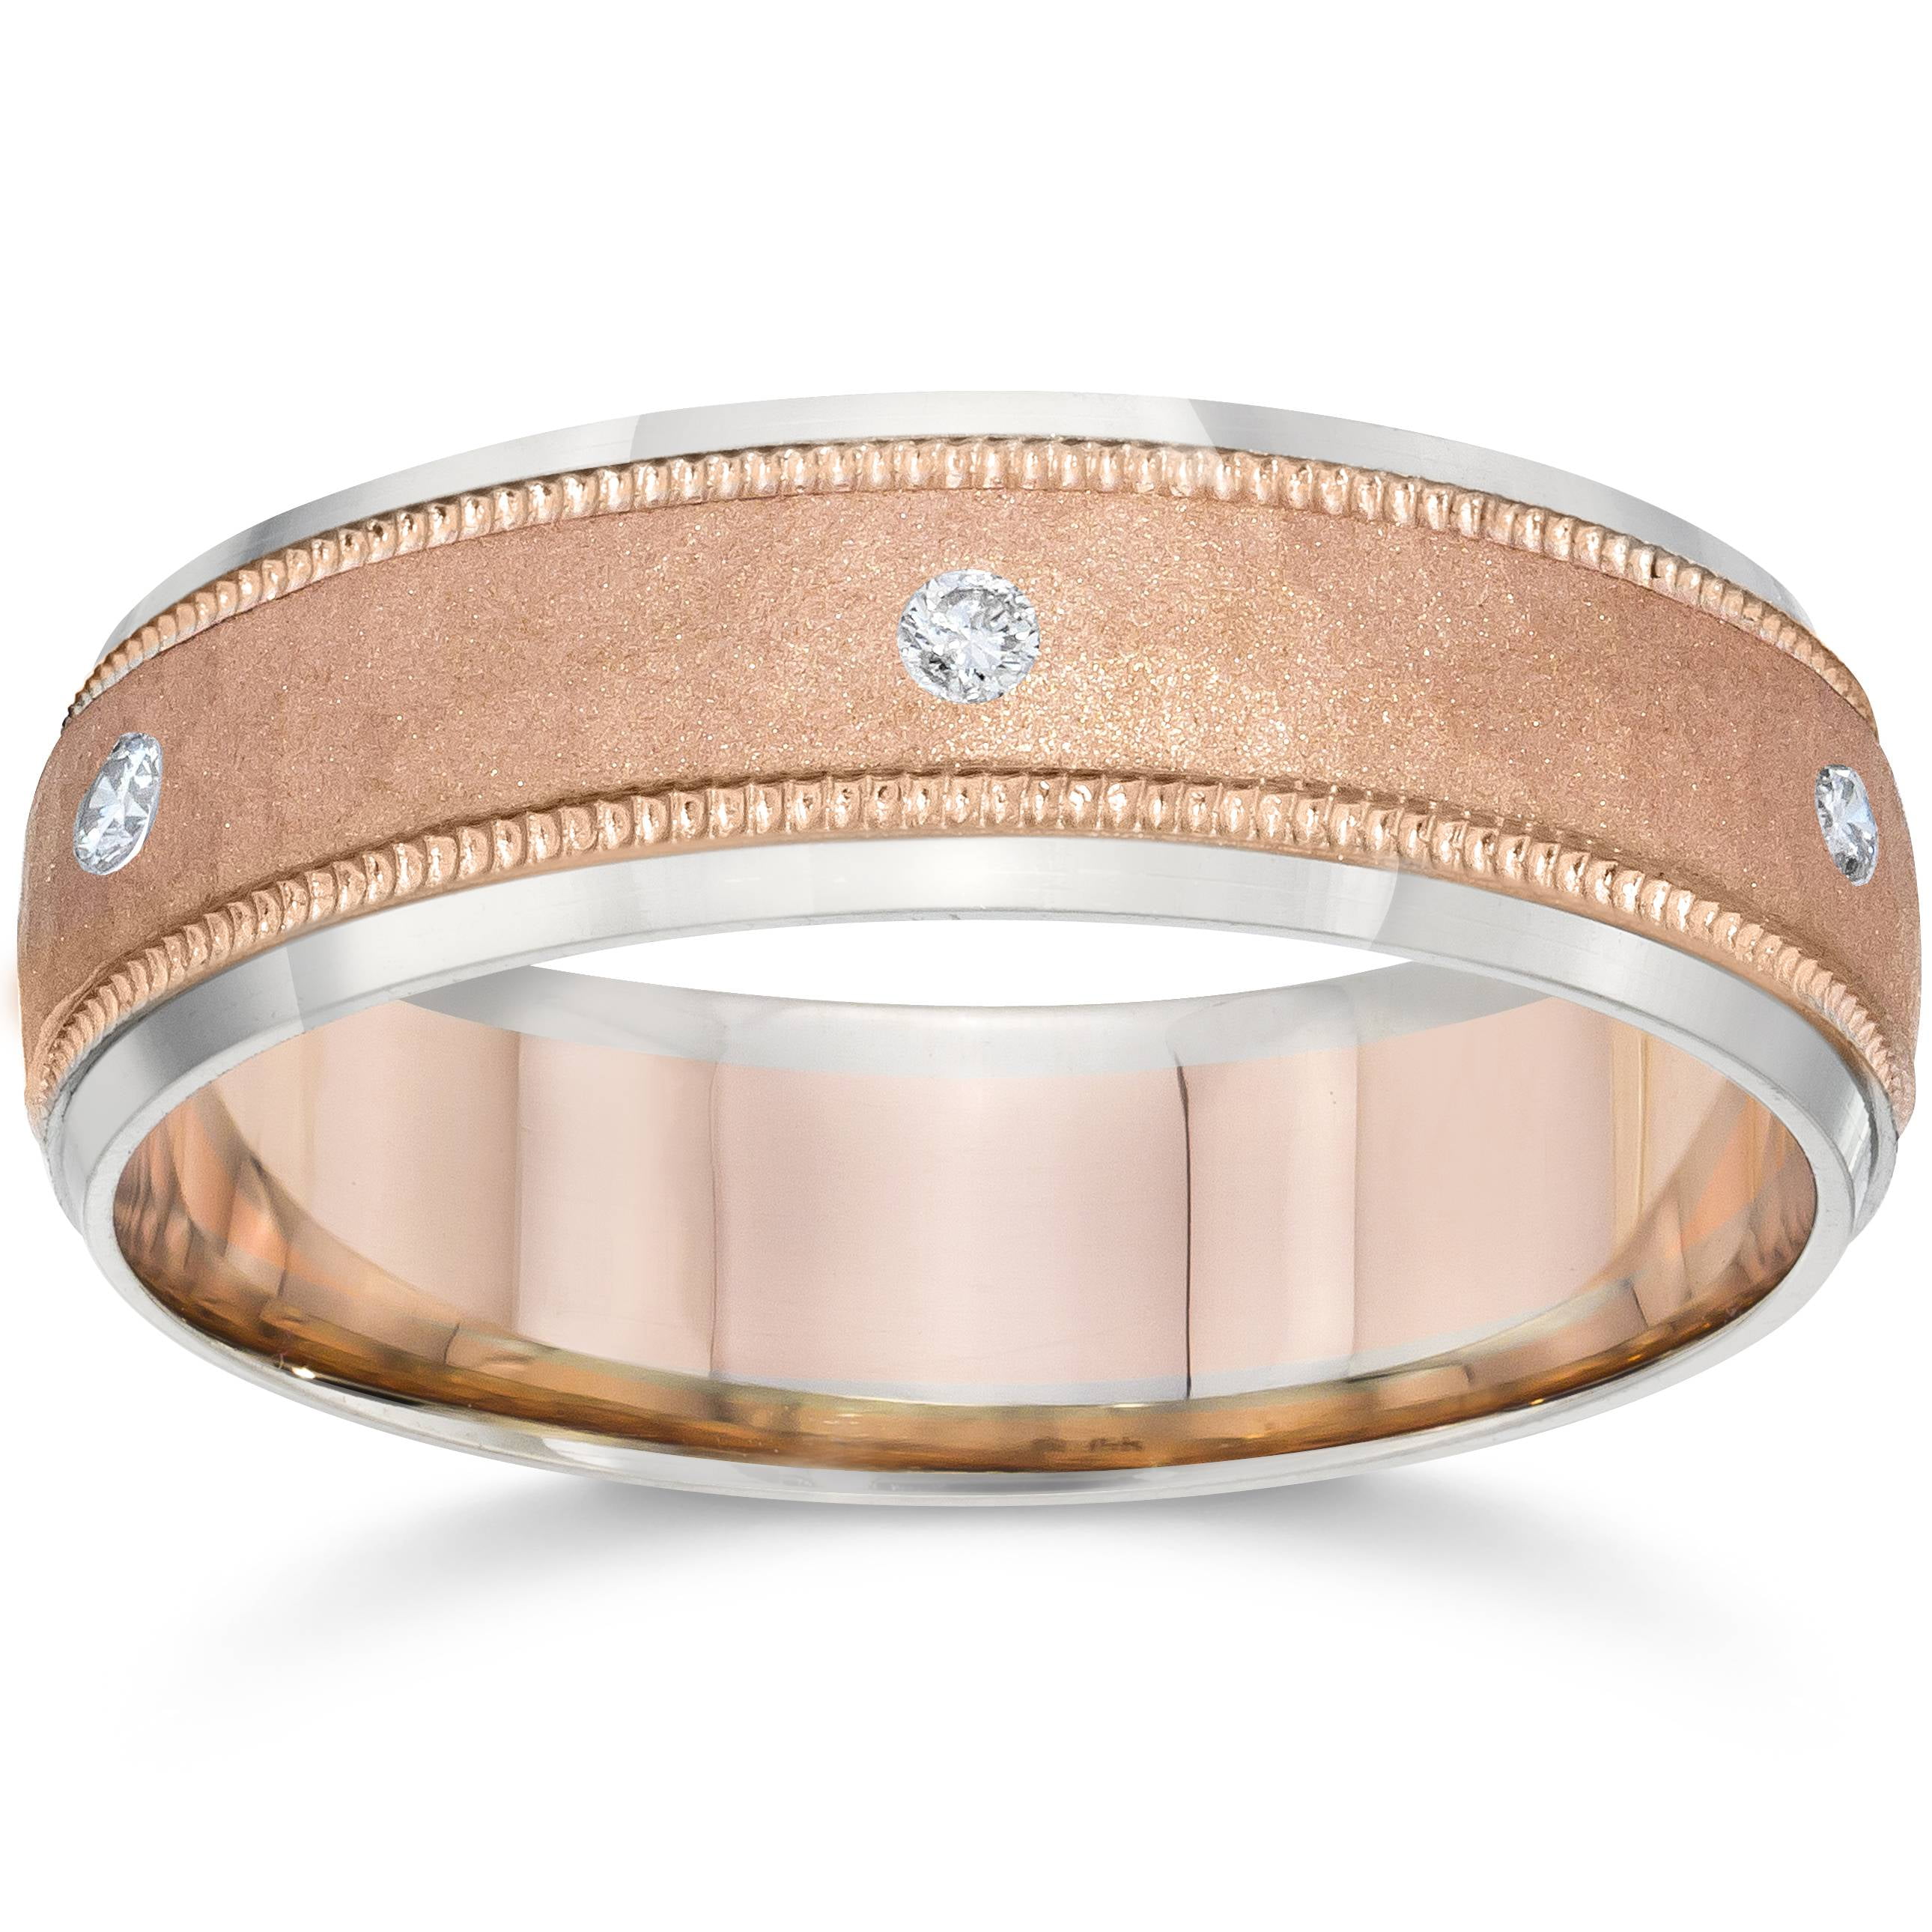 14k Solid White Gold 6 mm Round Cut Diamond Men's Wedding Band Ring